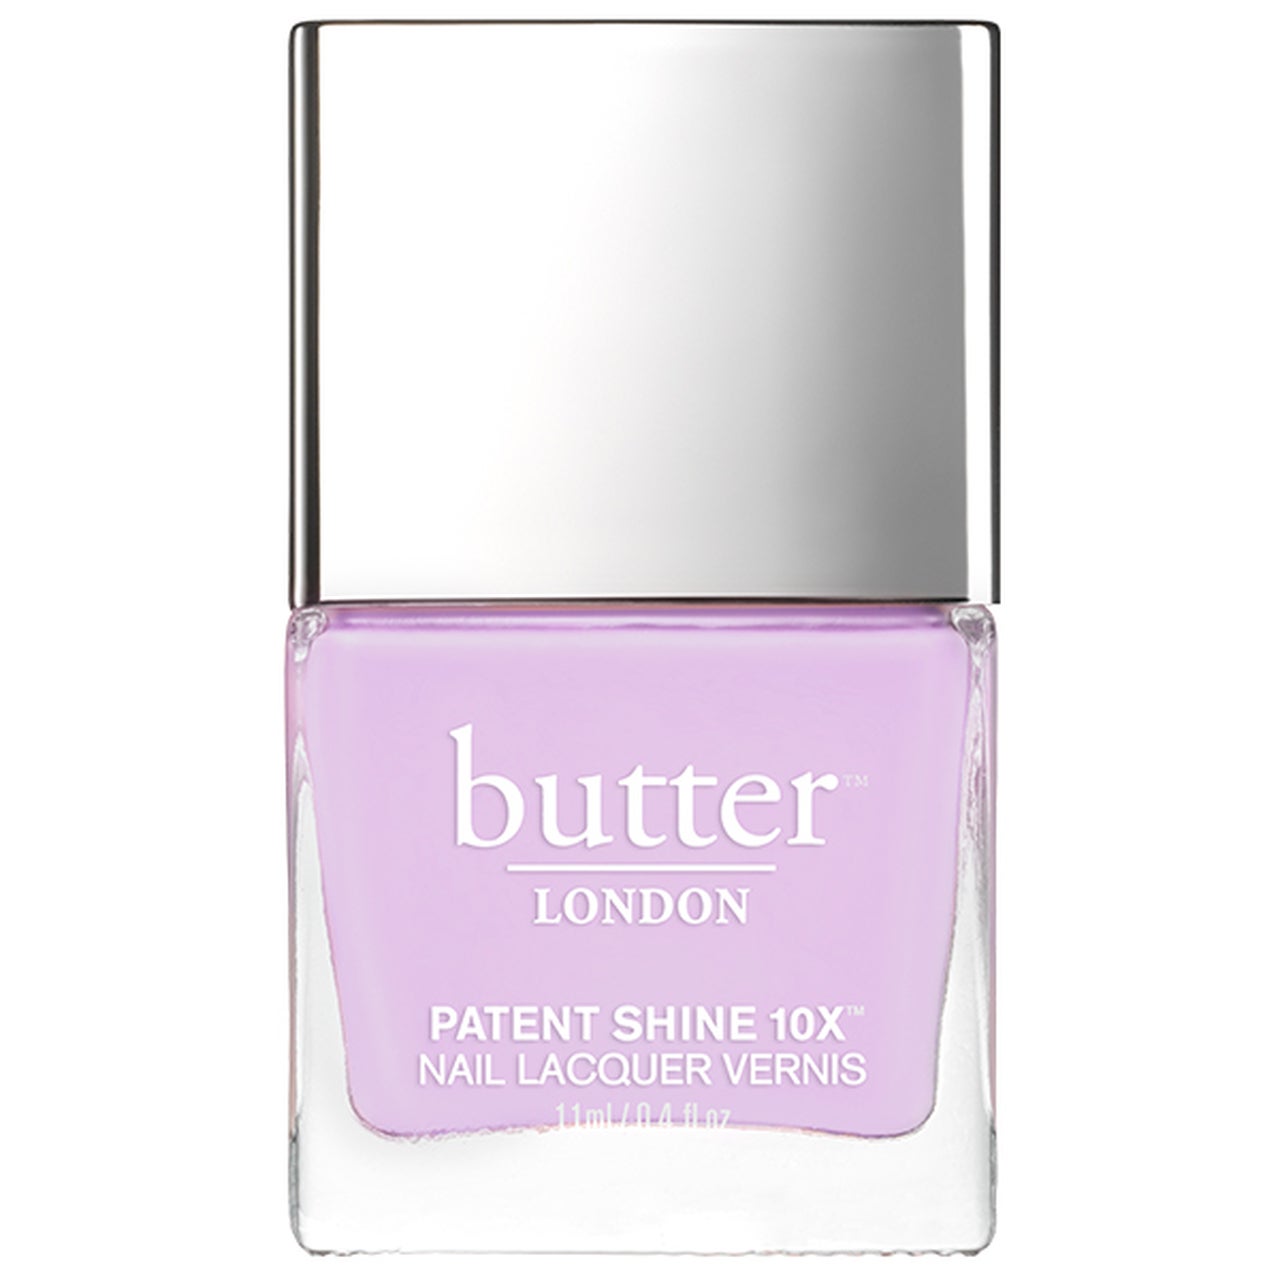 Butter London + English Lavender Patent Shine 10X Nail Lacquer